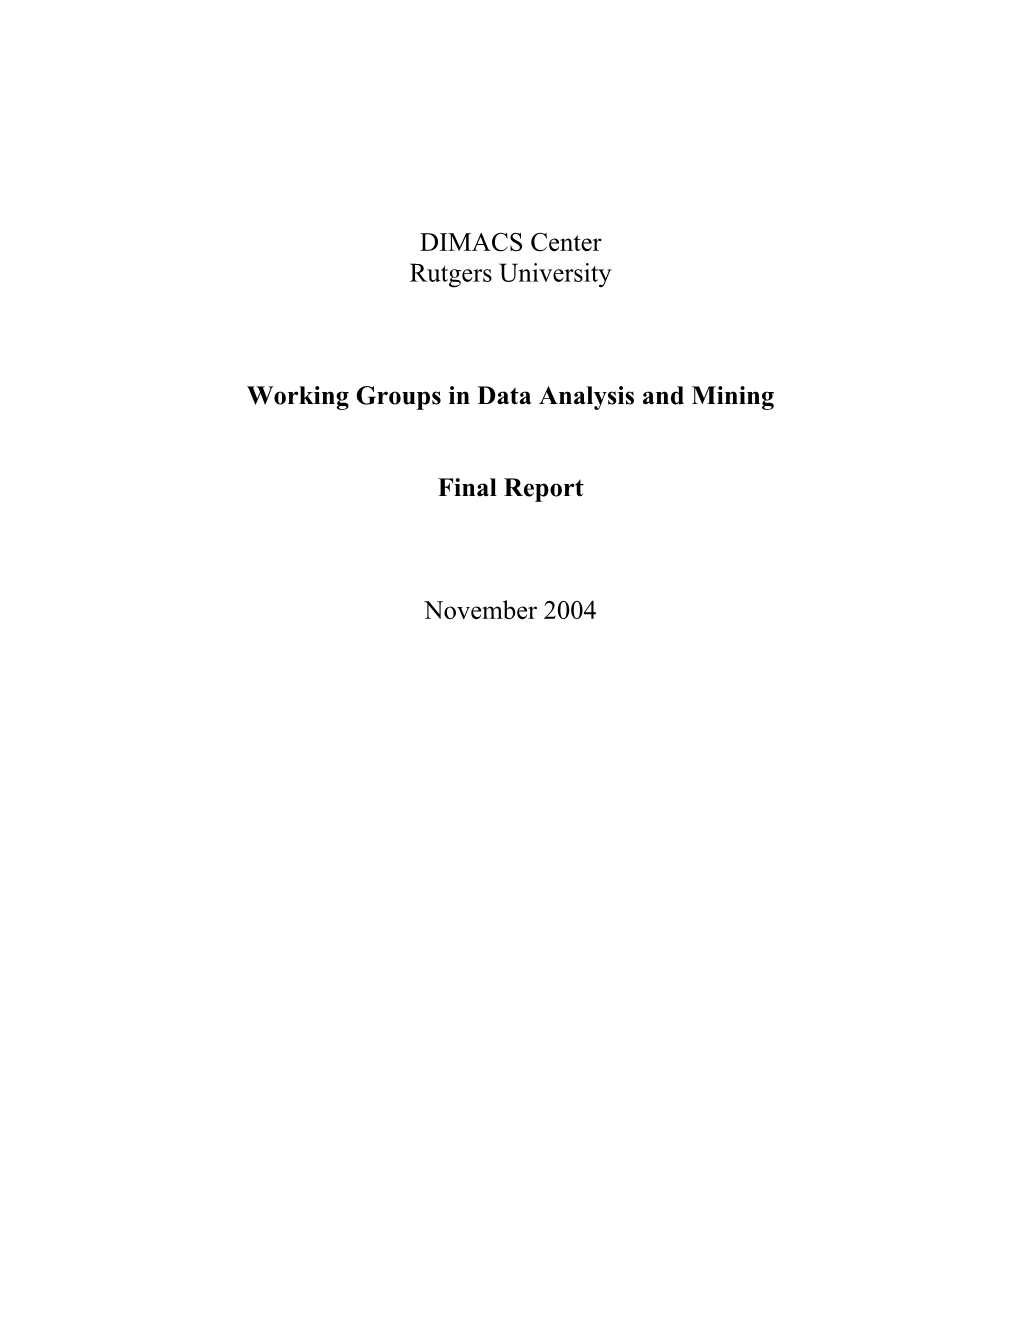 DIMACS Research and Education Institute (DREI): DREI'98 Report